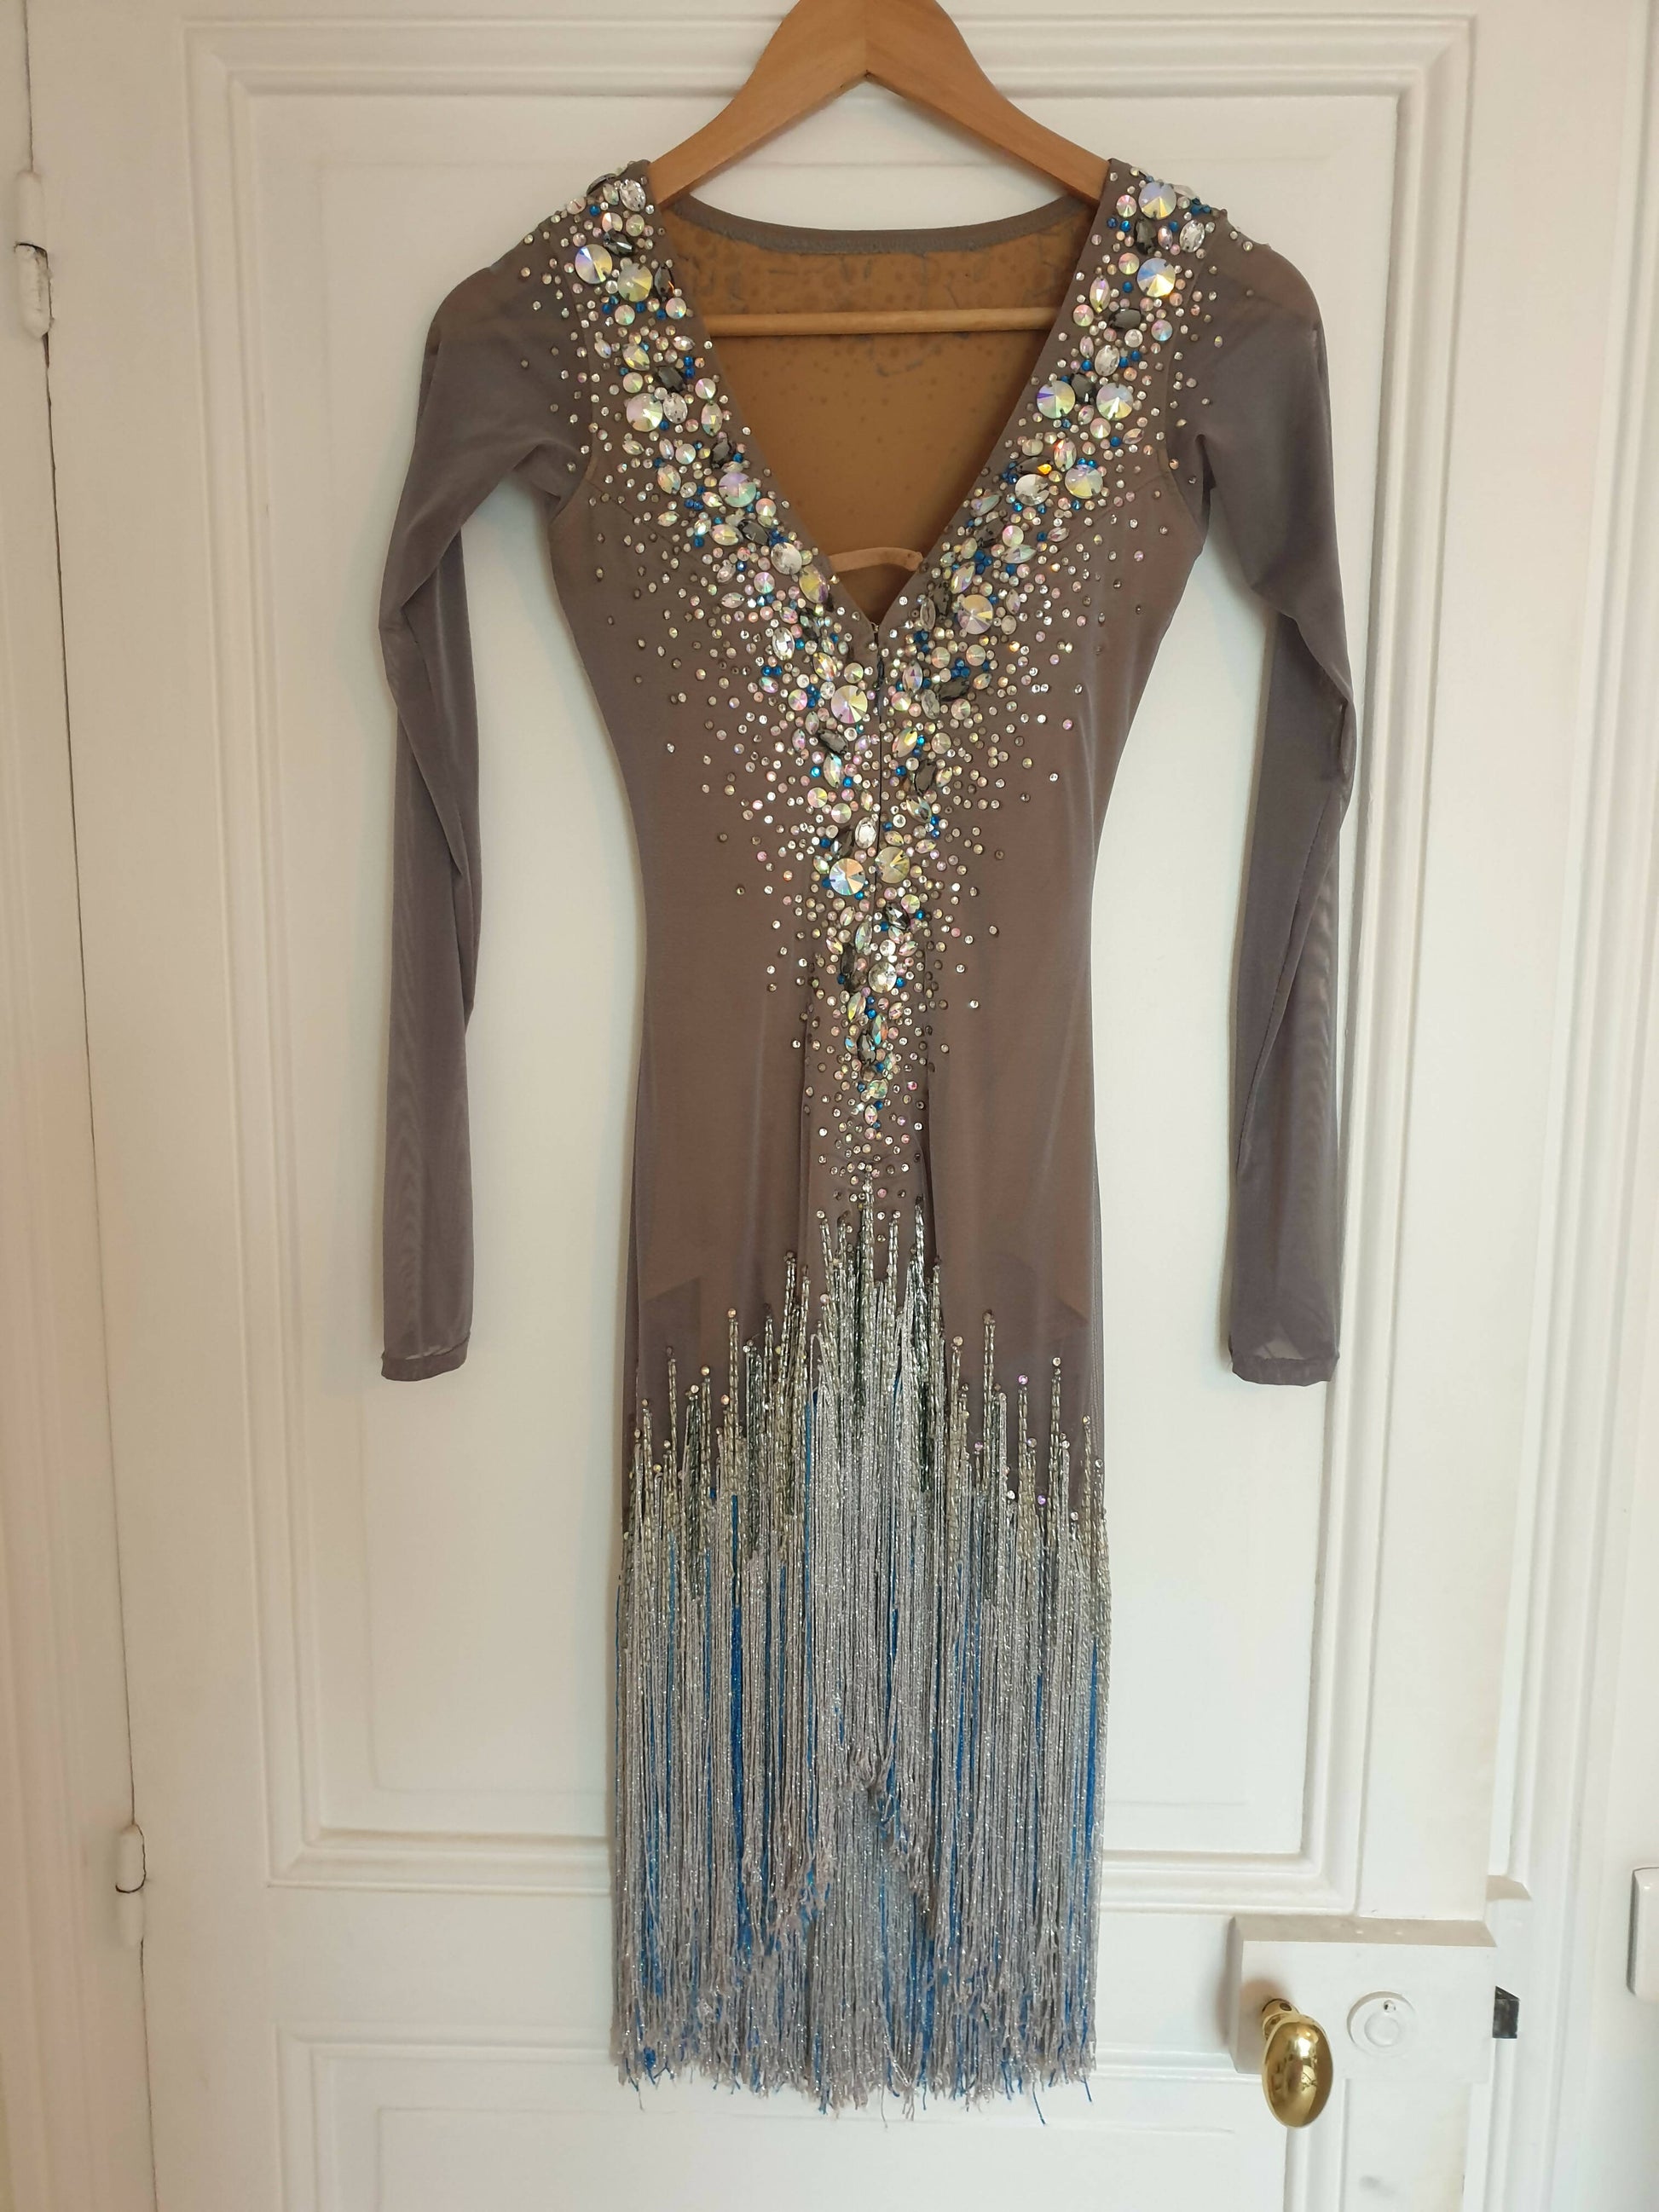 Grey Latin Dance Dress with Fringe, latin dresses for sale, rhythm